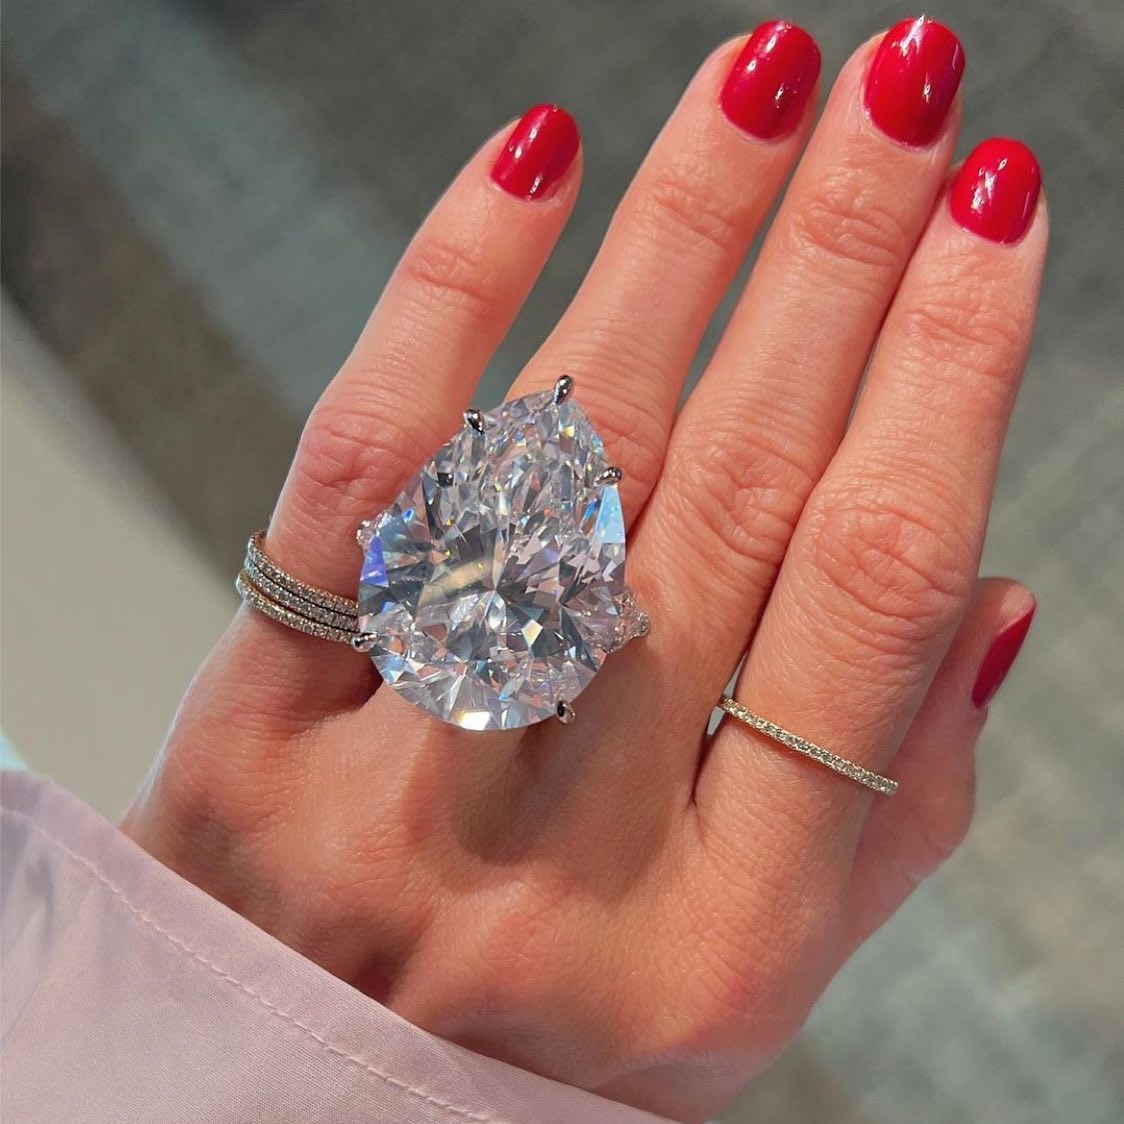 10 Carat Diamond Ring Designed by Bez Ambar: The Best Prices for the Best  Quality | 10 carat diamond ring, Engagement earrings, Beautiful wedding  rings